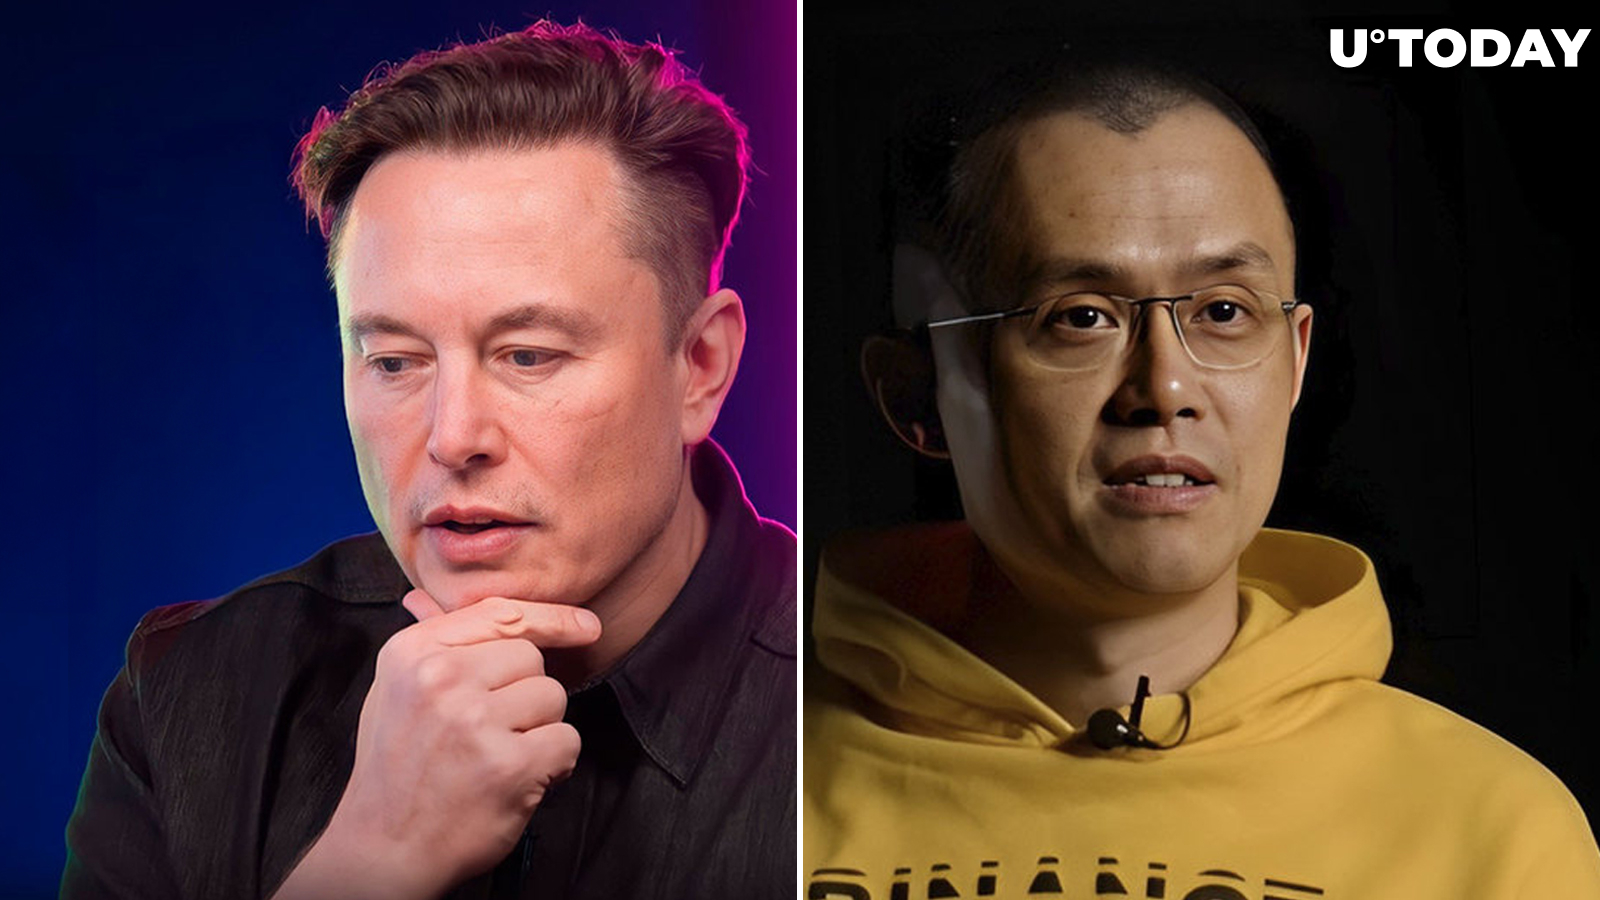 New Elon Musk Book Triggers Binance Boss Changpeng "CZ" Zhao's Reaction